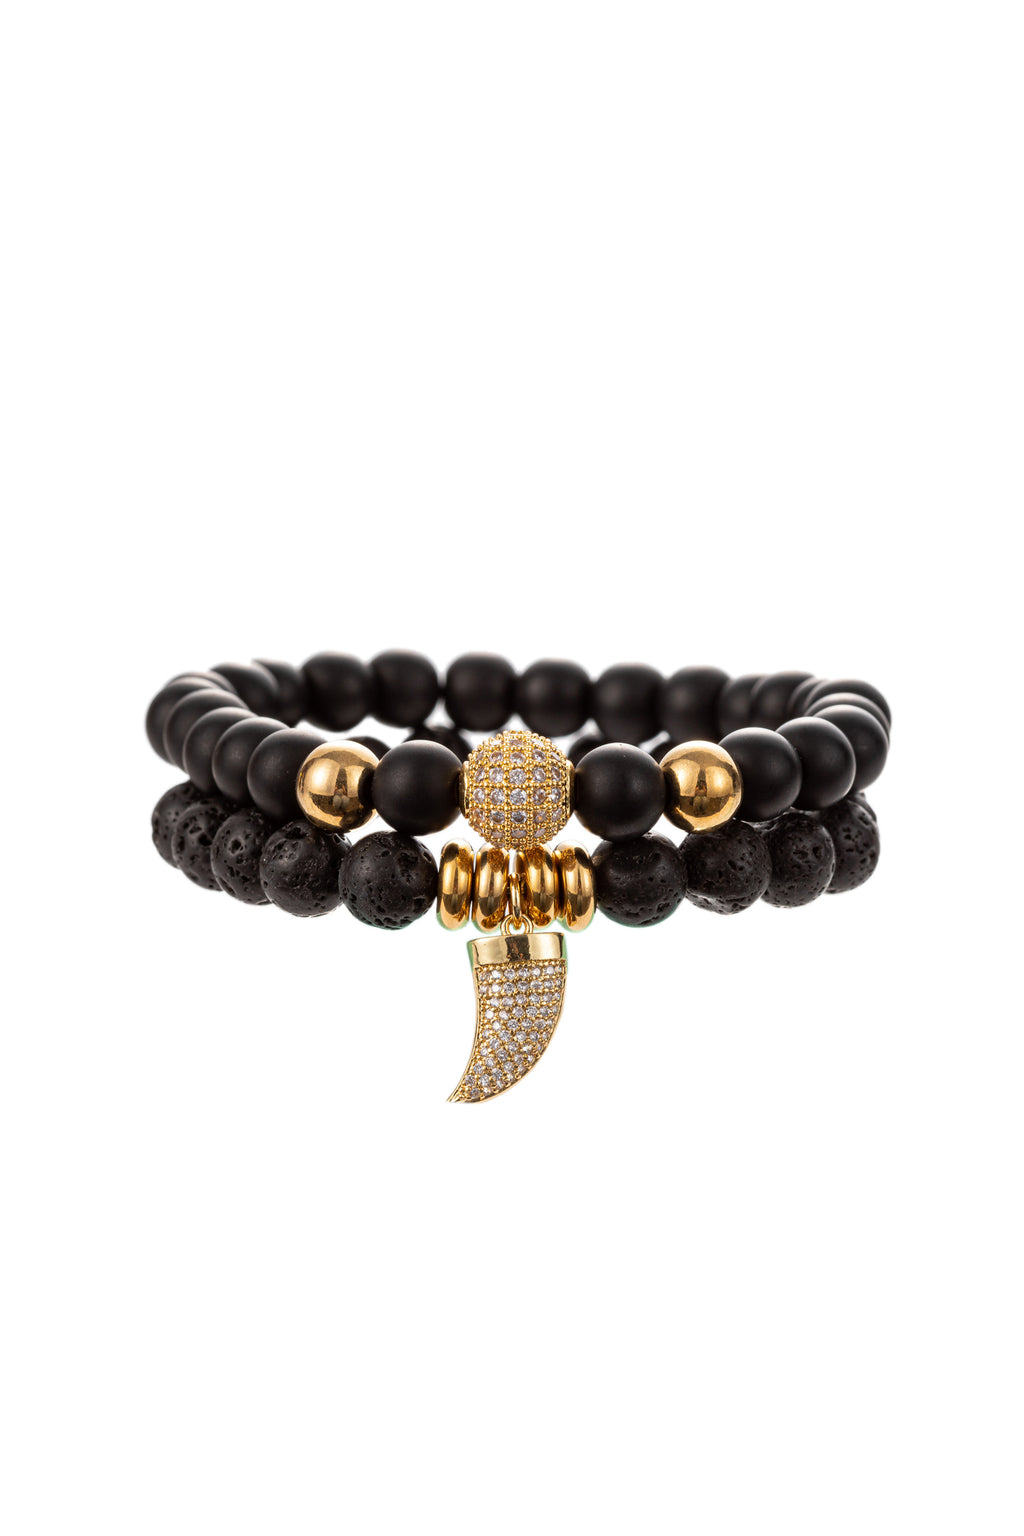 Agate beaded bracelet set with a brass CZ crystal horn charm.